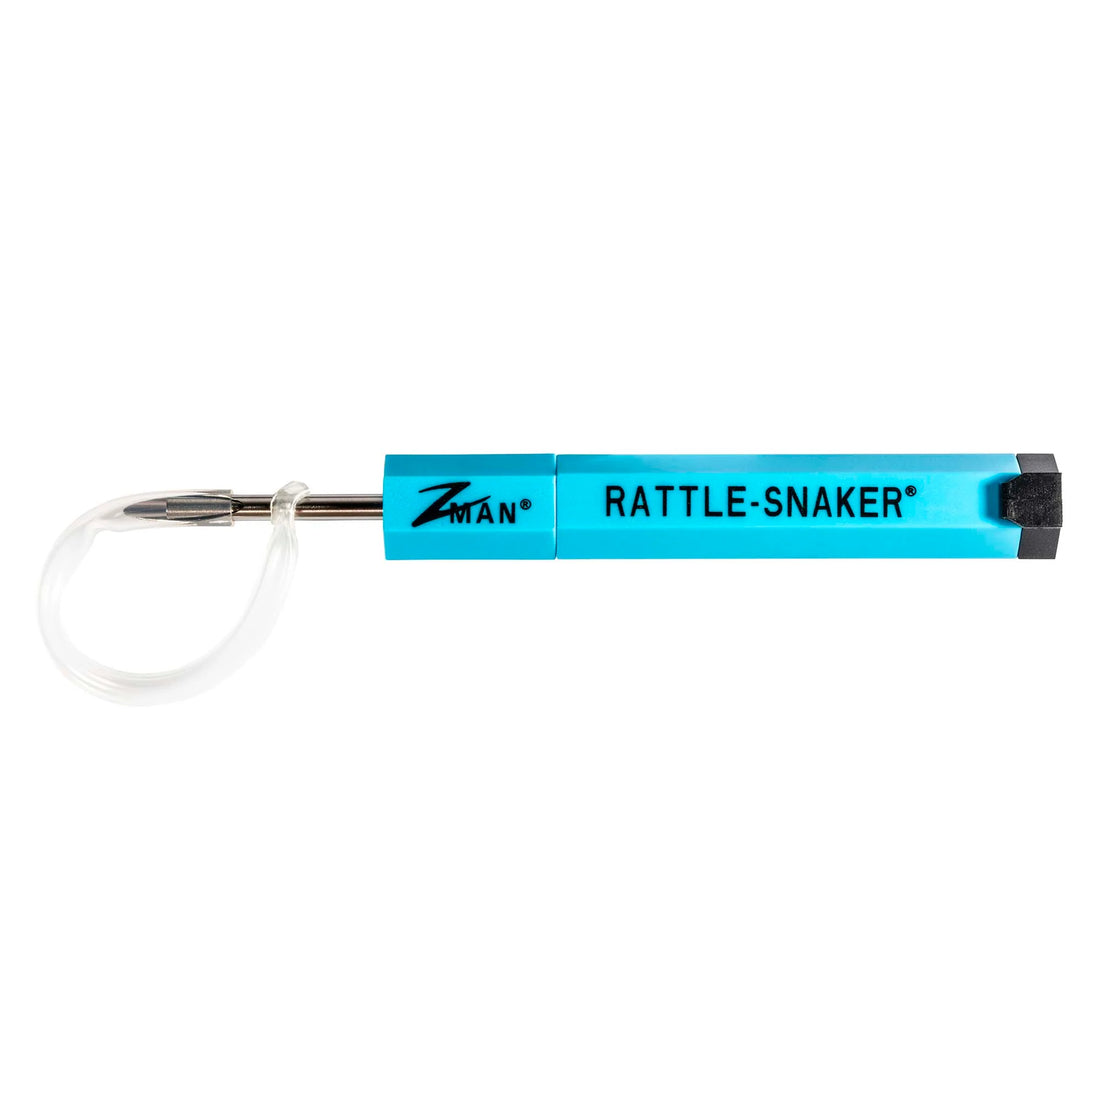 Z-Man Rattle-Snaker Kit